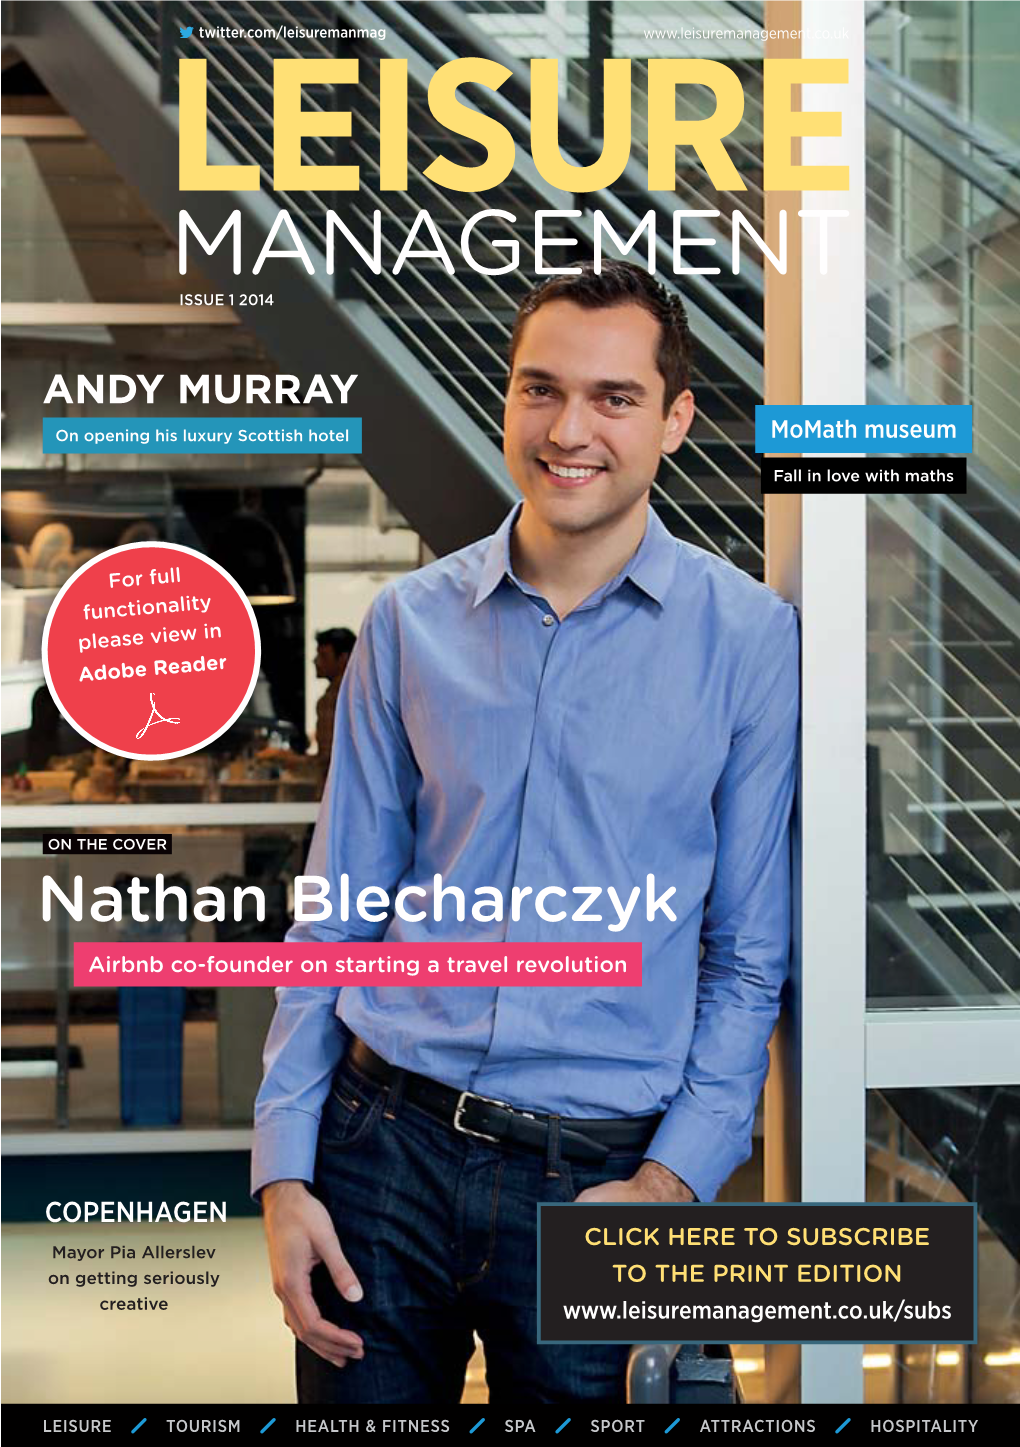 Leisure Management Issue 1 2014